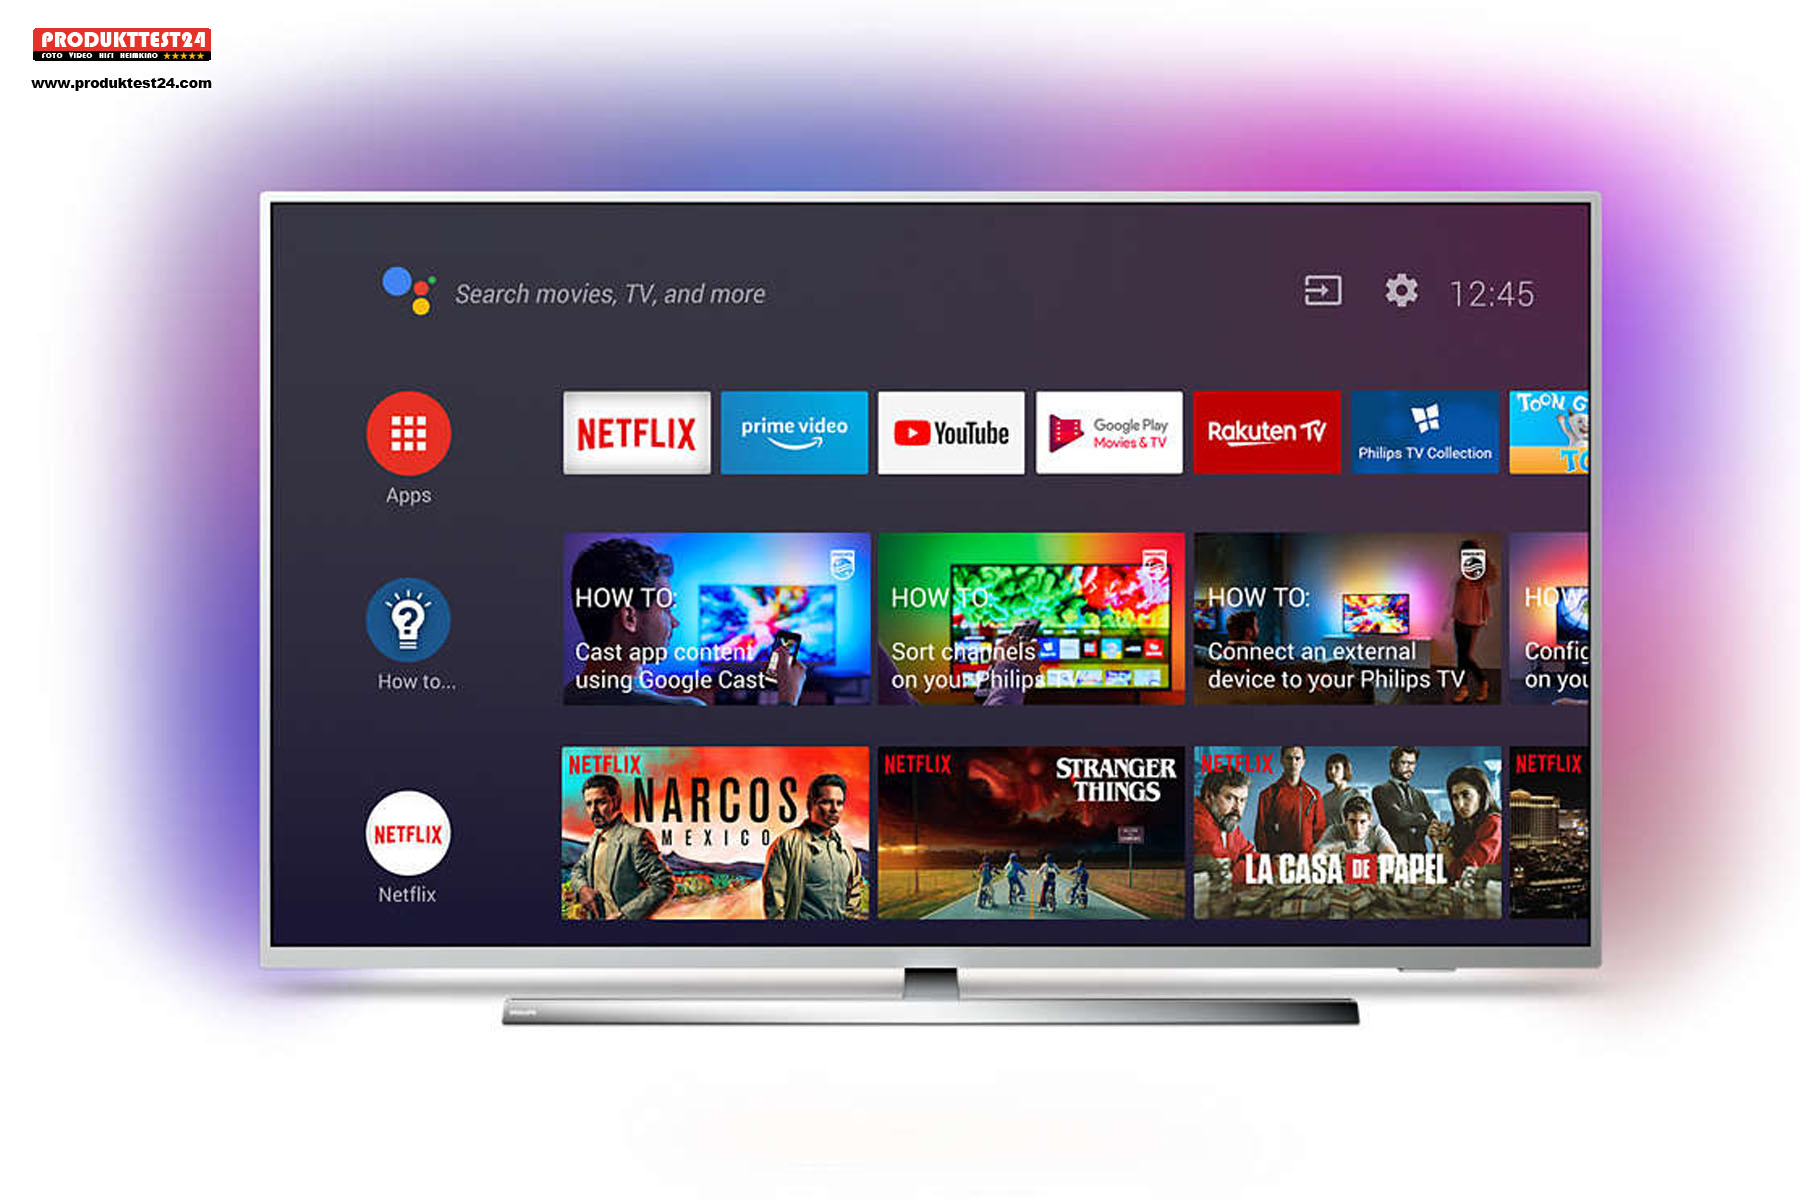 Android.TV auf Basis von Android 9.0